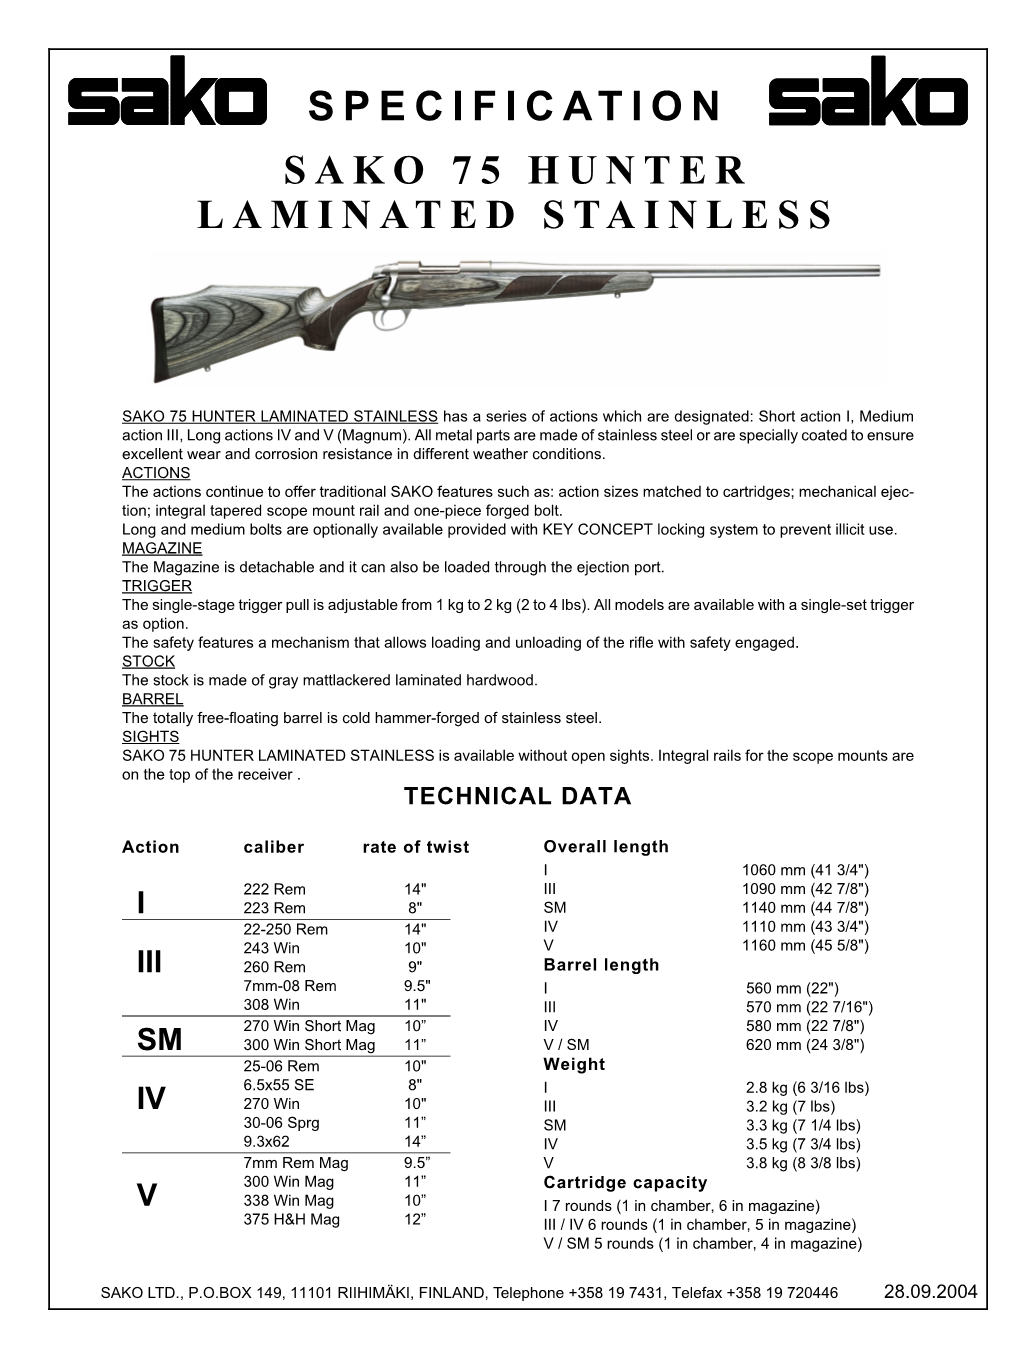 Specification Sako 75 Hunter Laminated Stainless